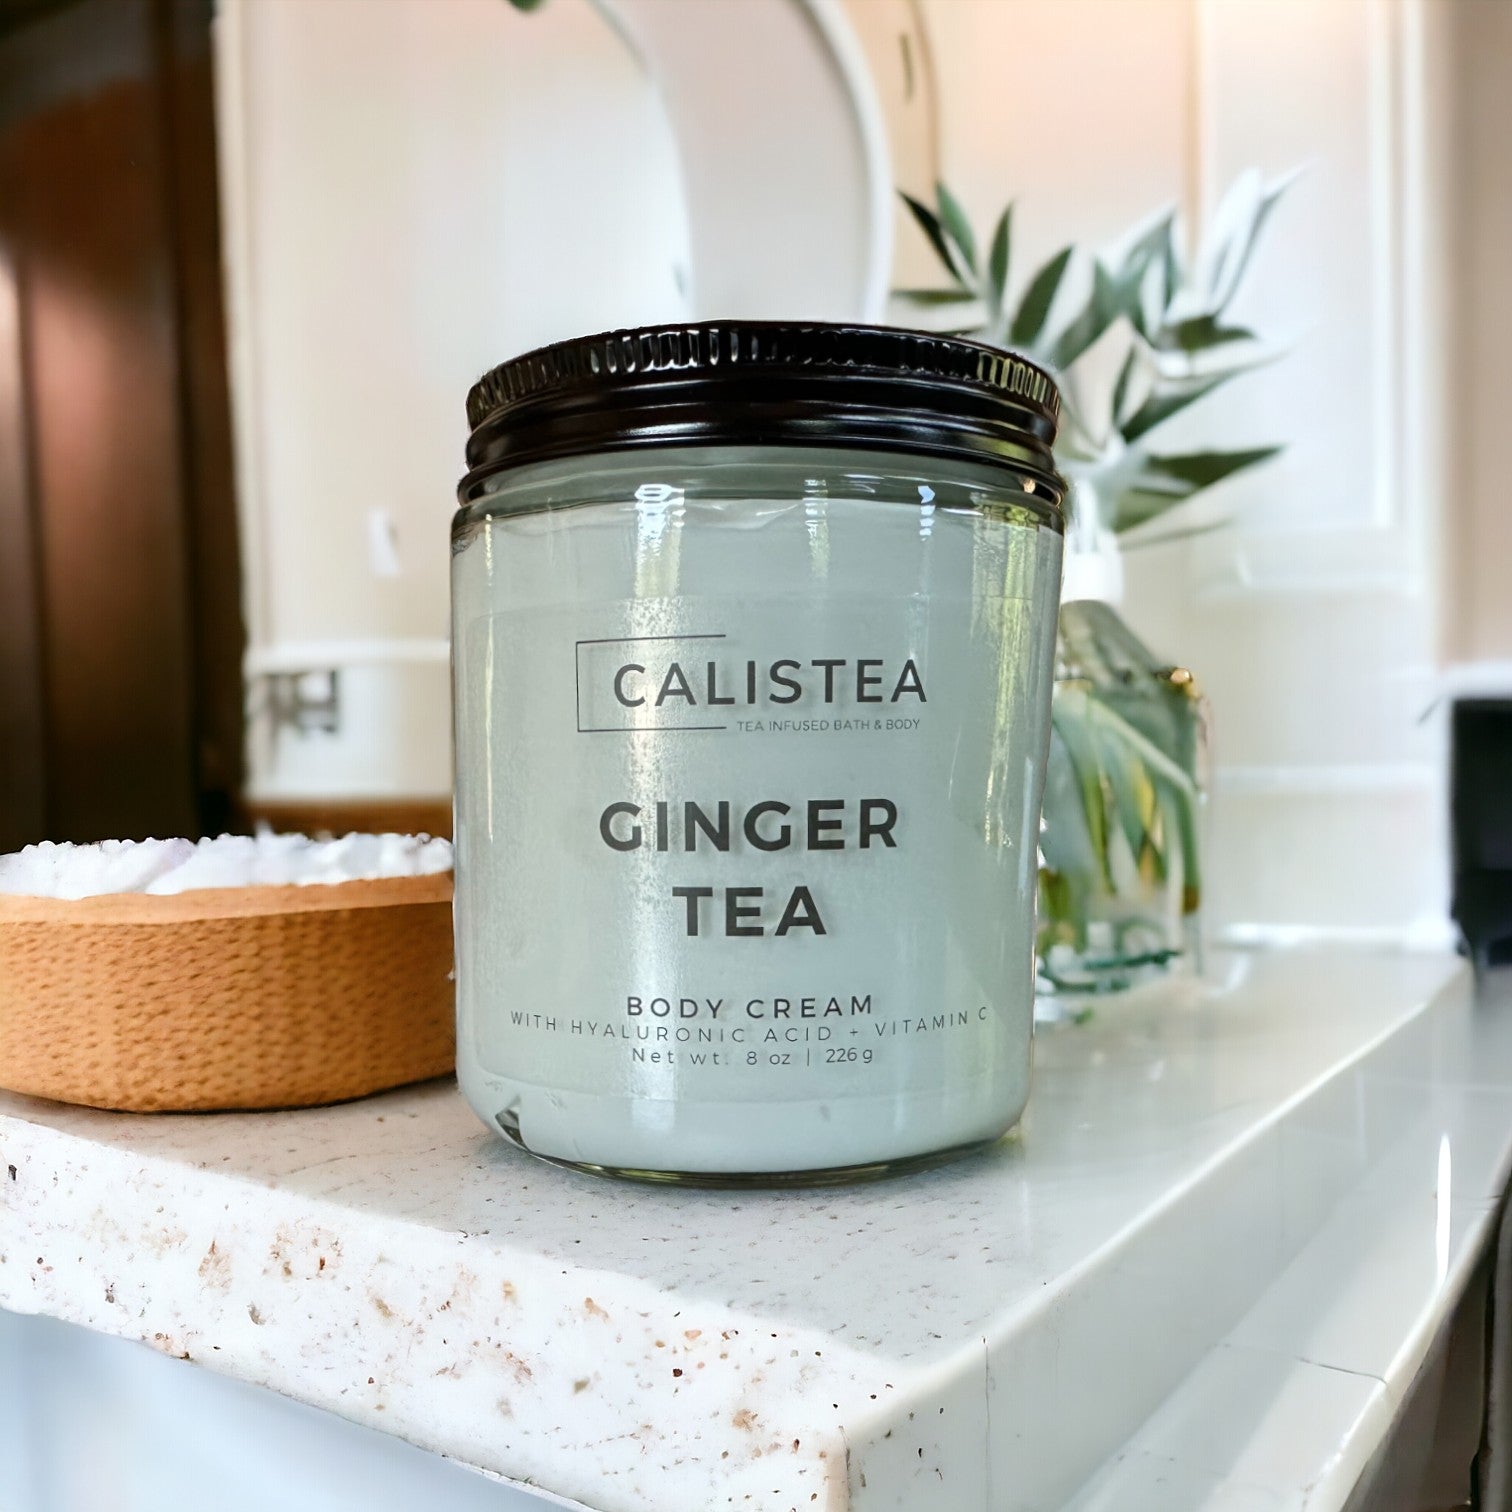 Ginger Tea - Calistea8 oz by volume